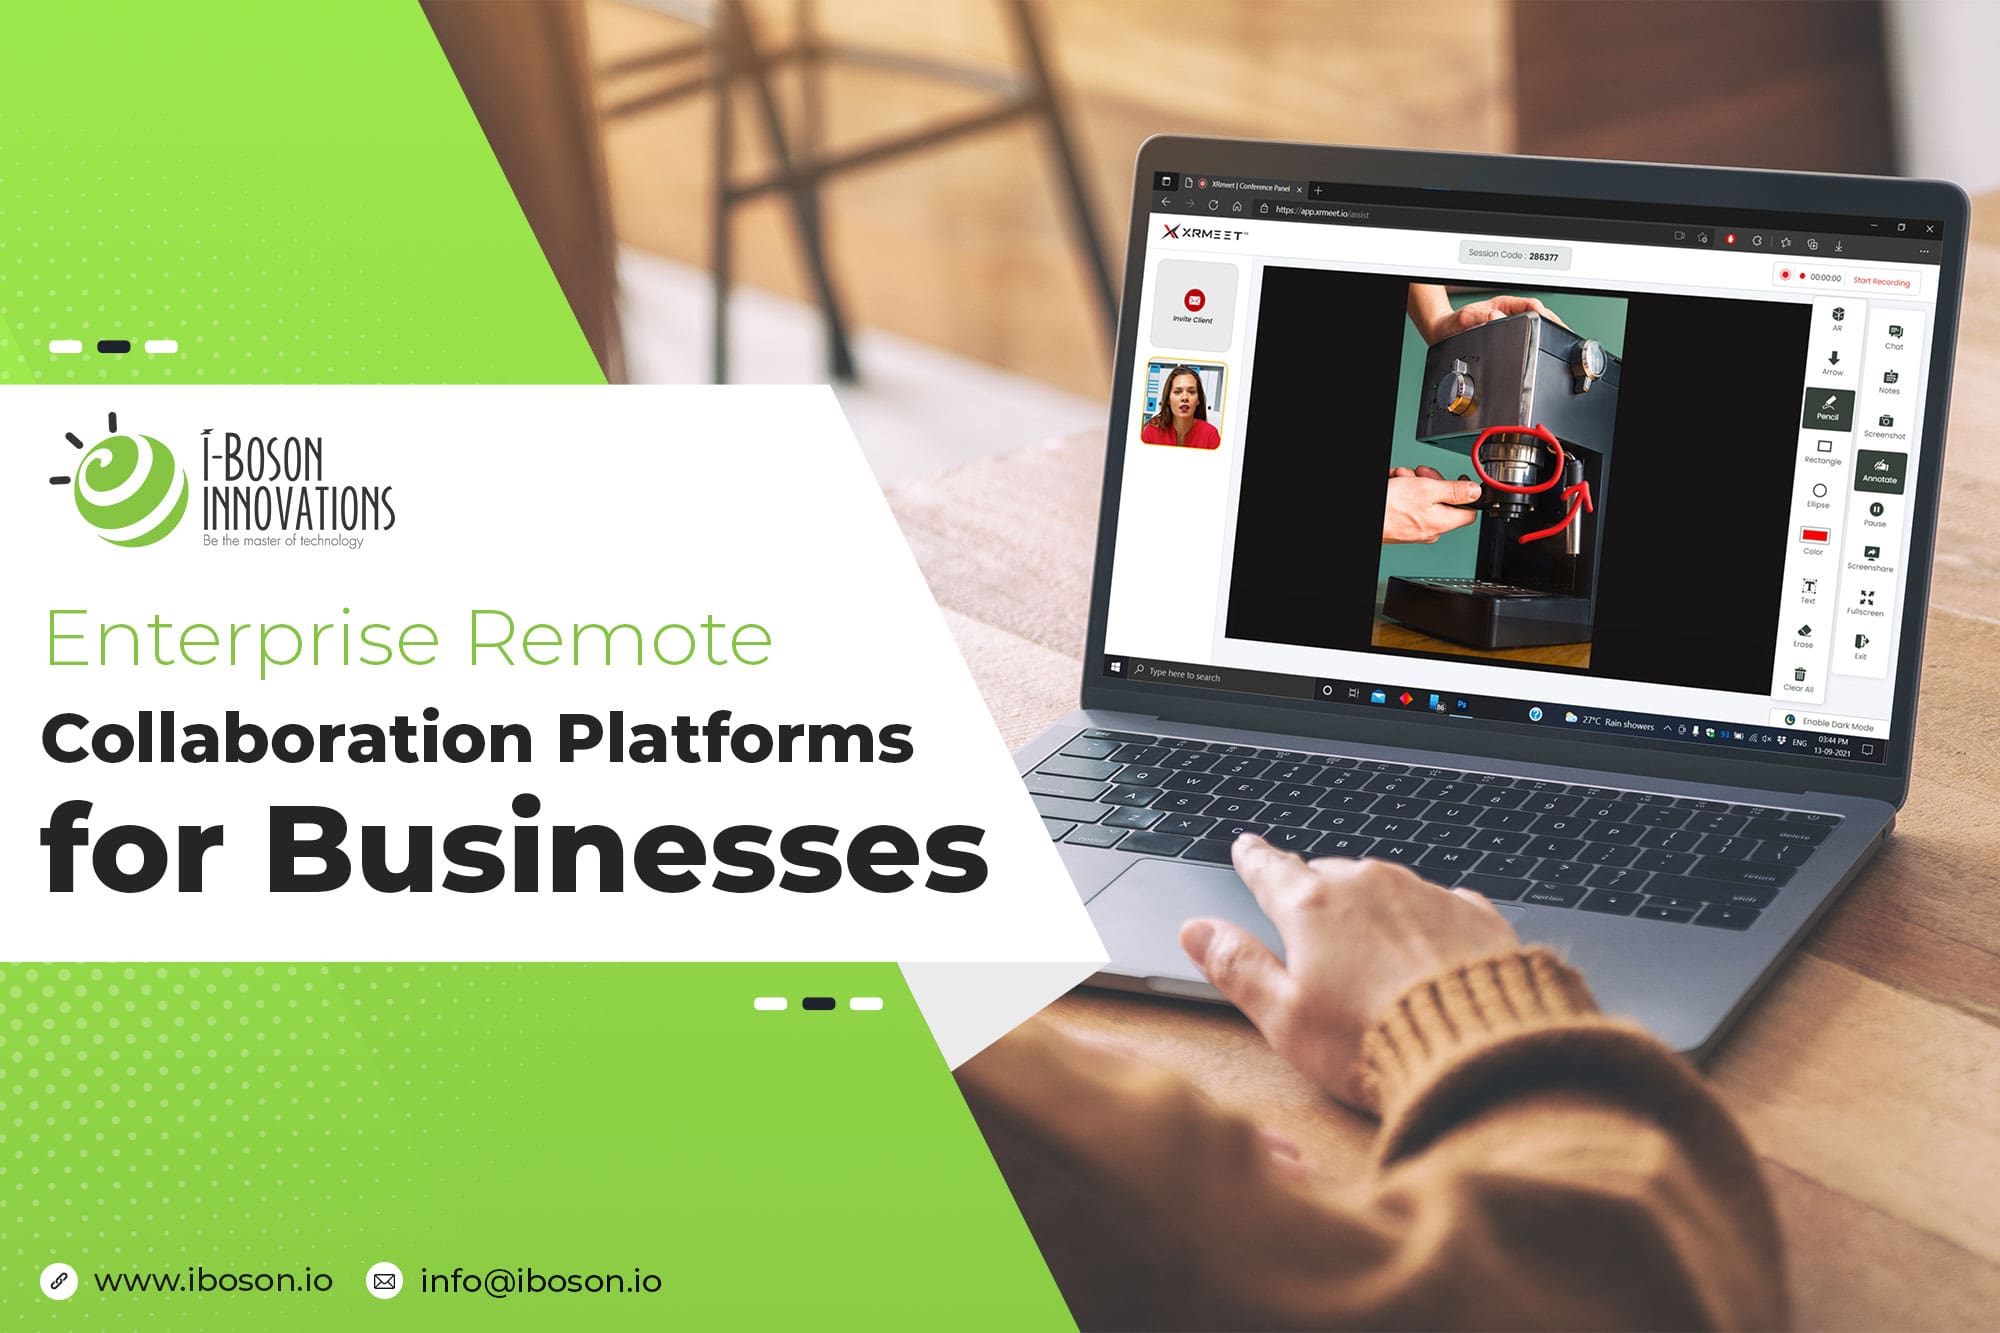 Enterprise remote collaboration platforms for business